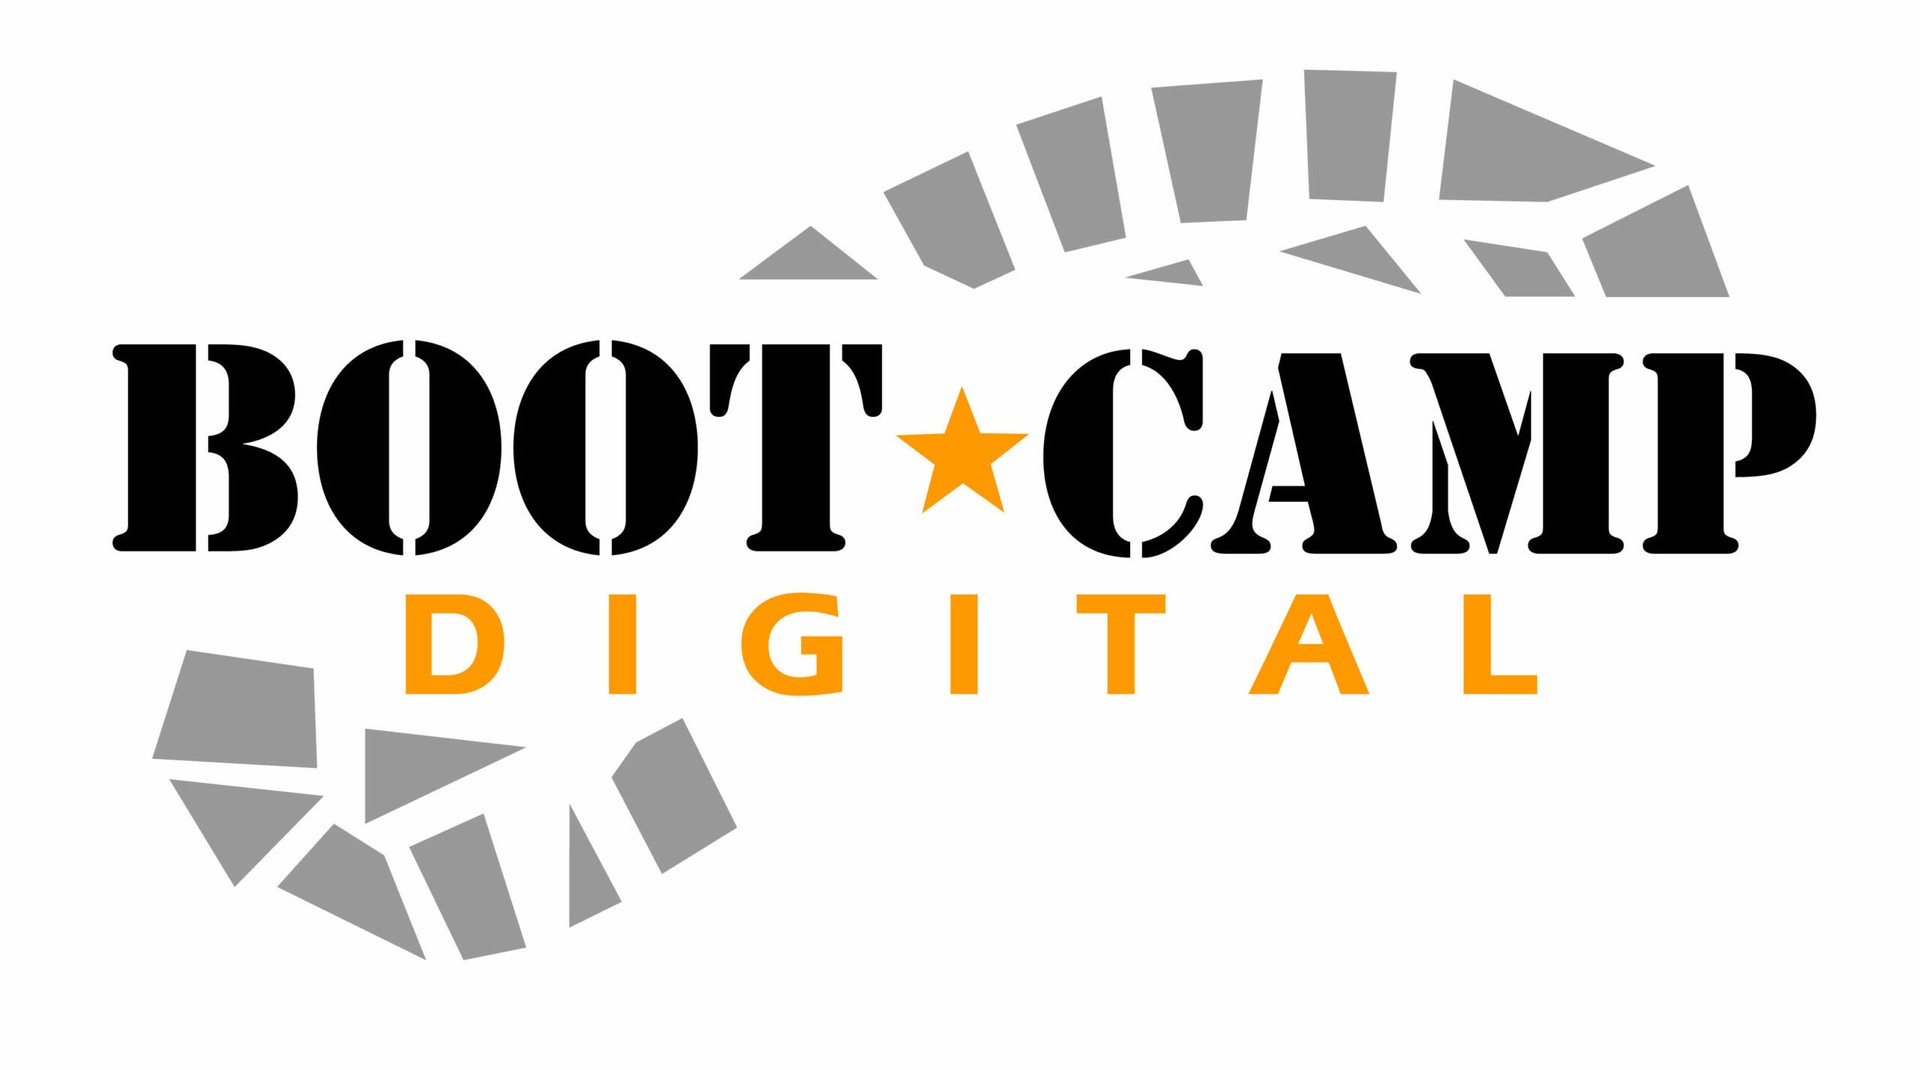 Digital marketing courses in Noida - Bootcamp logo